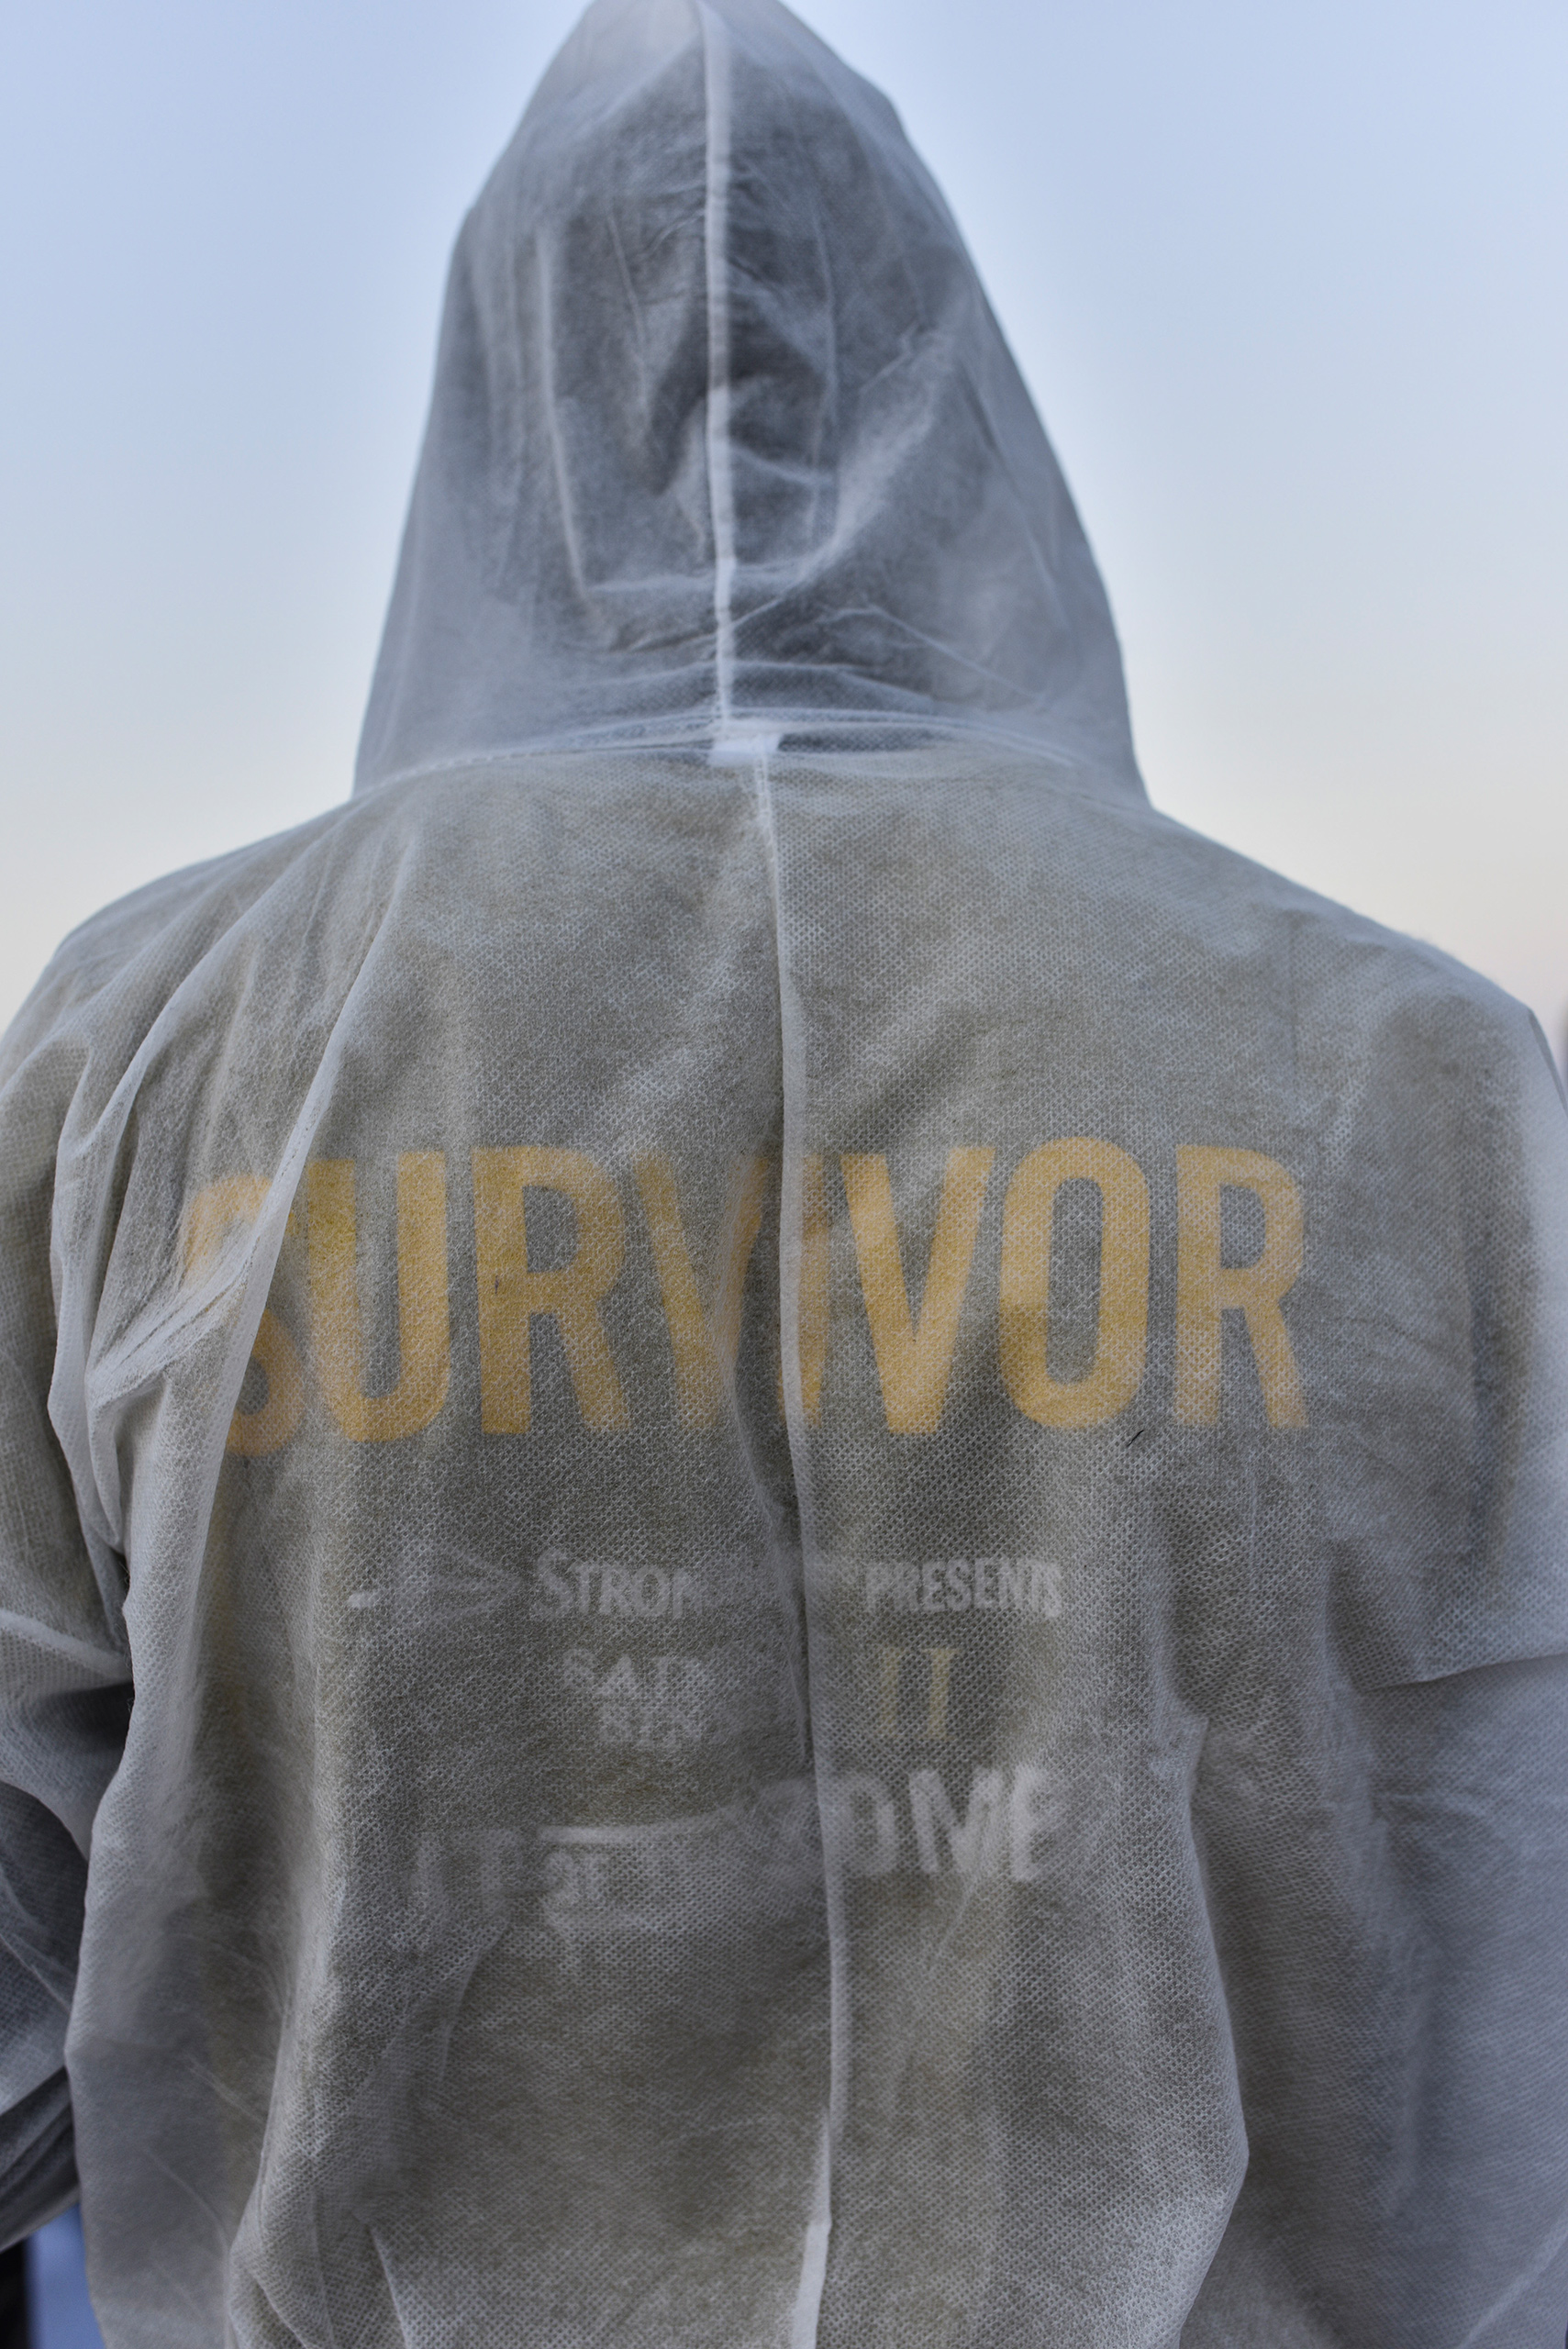 A migrant wearing a "Survivor" shirt, Aug. 21, 2016.